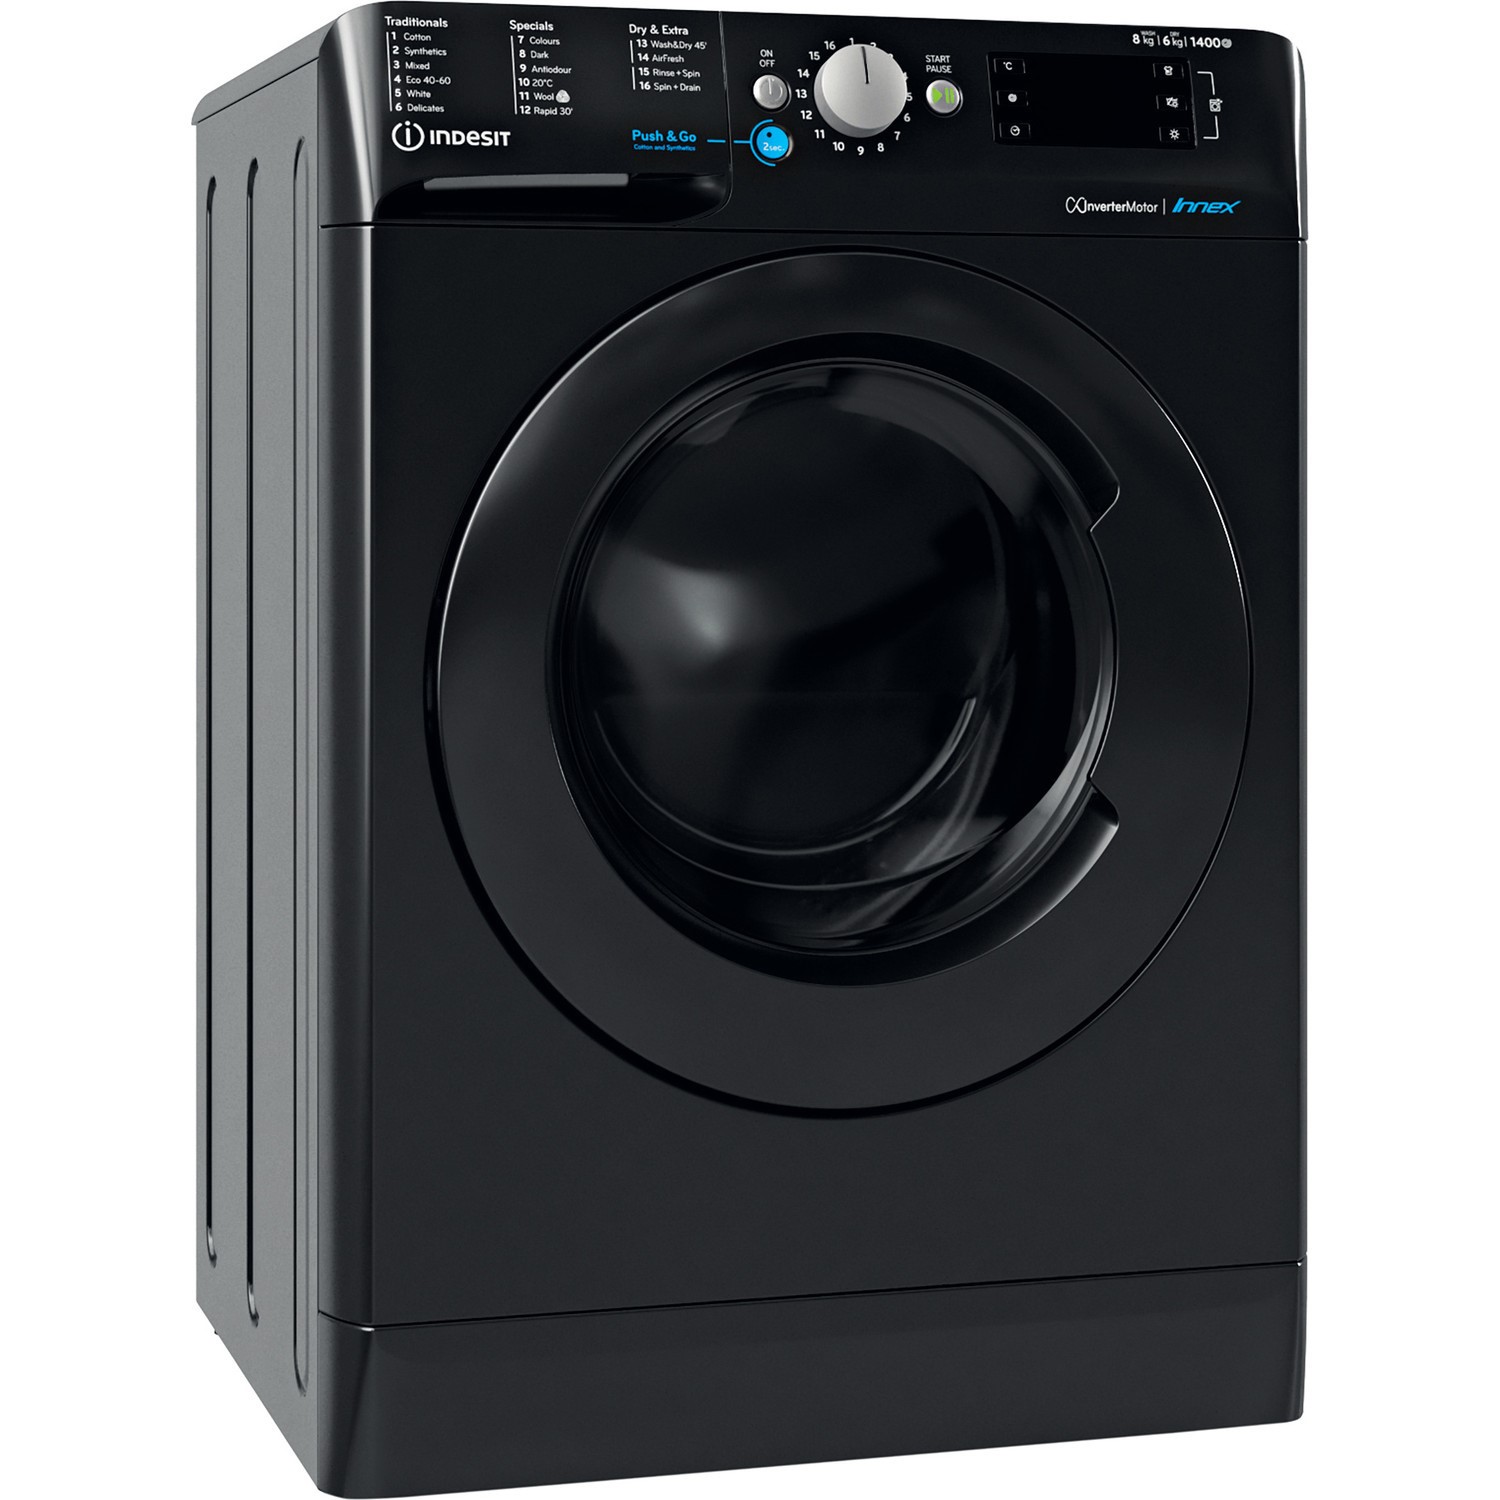 Photos - Washing Machine Indesit 8kg Wash 6kg Dry 1400rpm Washer Dryer - Black BDE86436XBUKN 